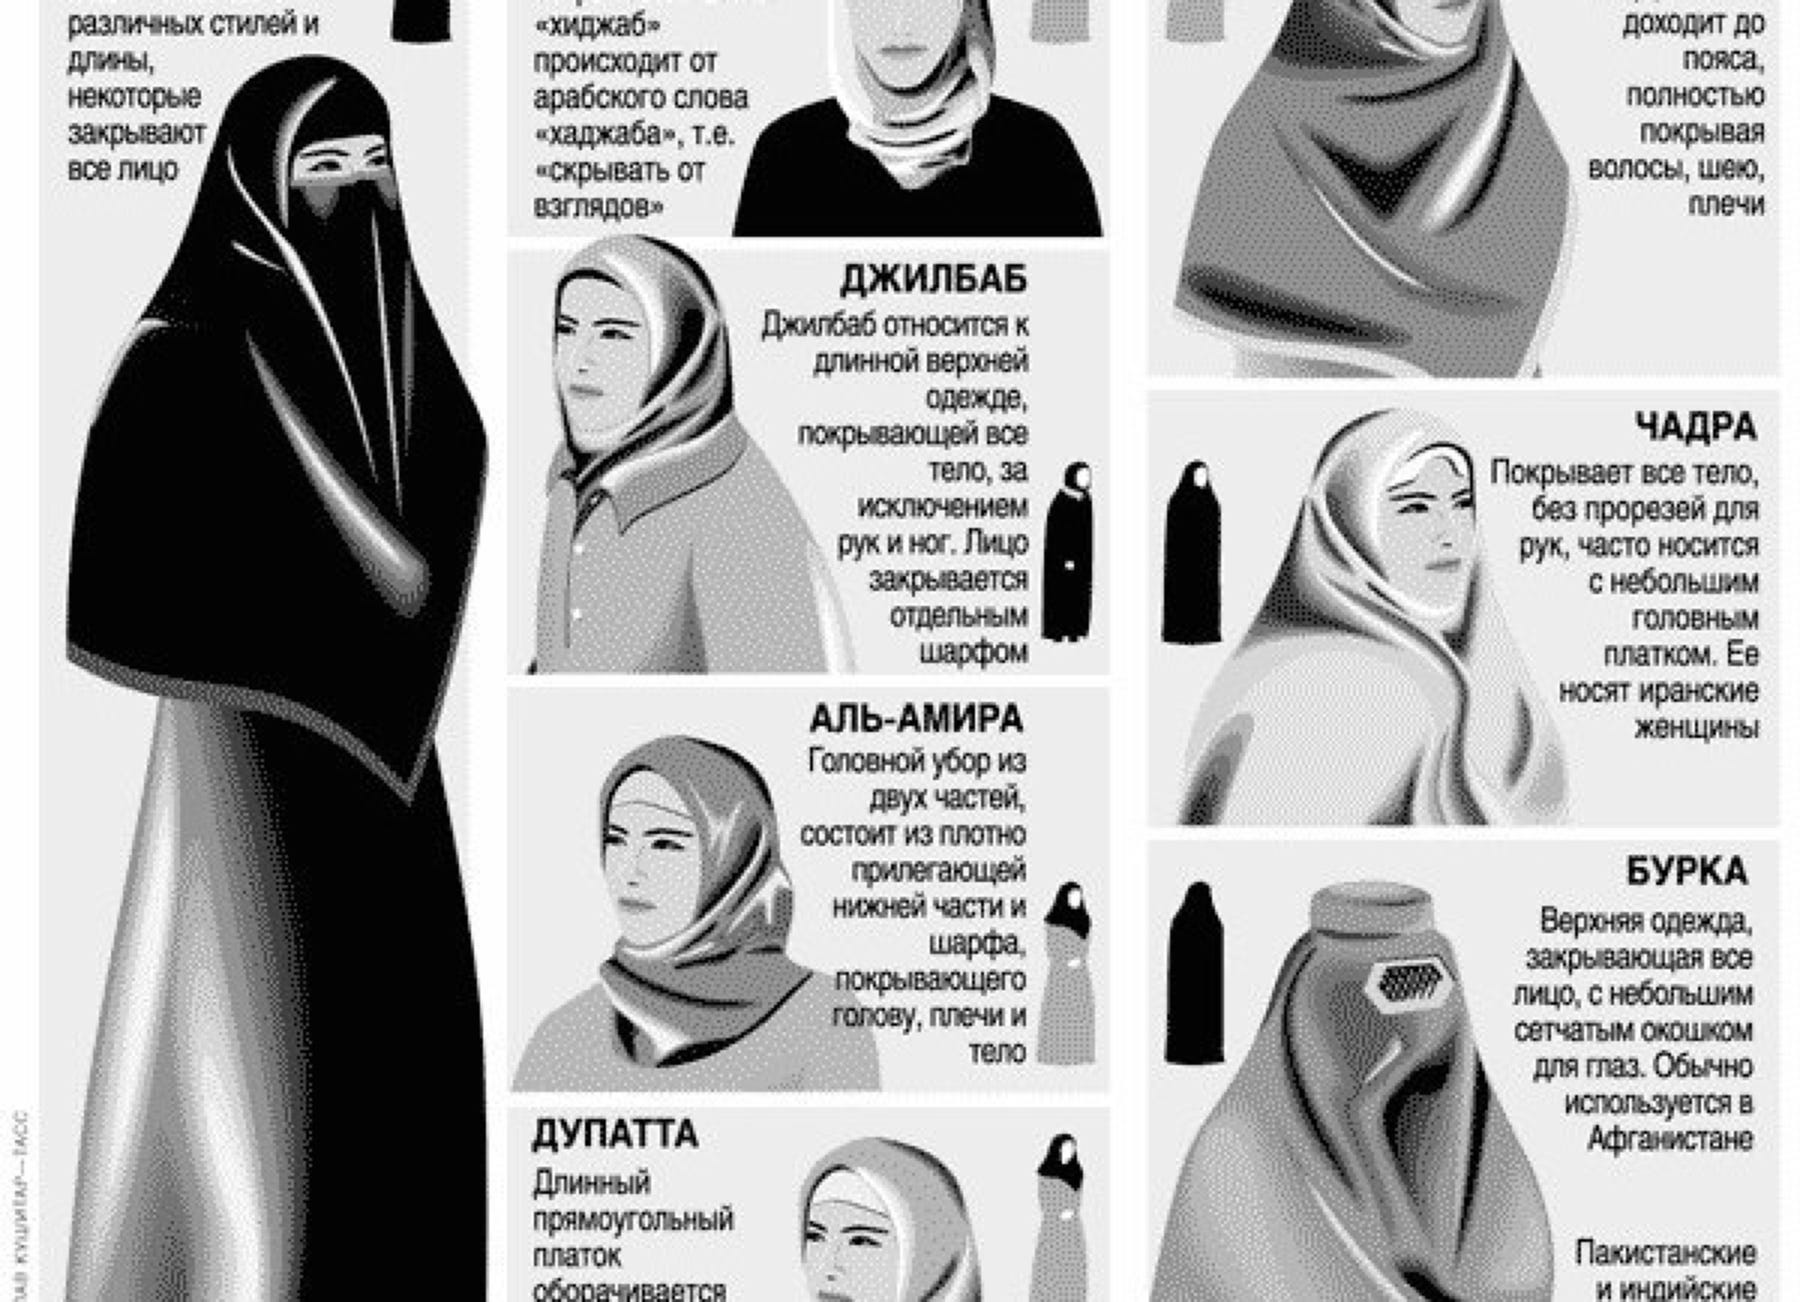 Можно ли голосовать мусульманам. Бурка паранджа никаб. Никаб хиджаб паранджа. Хиджаб паранджа чадра никаб отличия. Бурка хиджаб никаб паранджа.